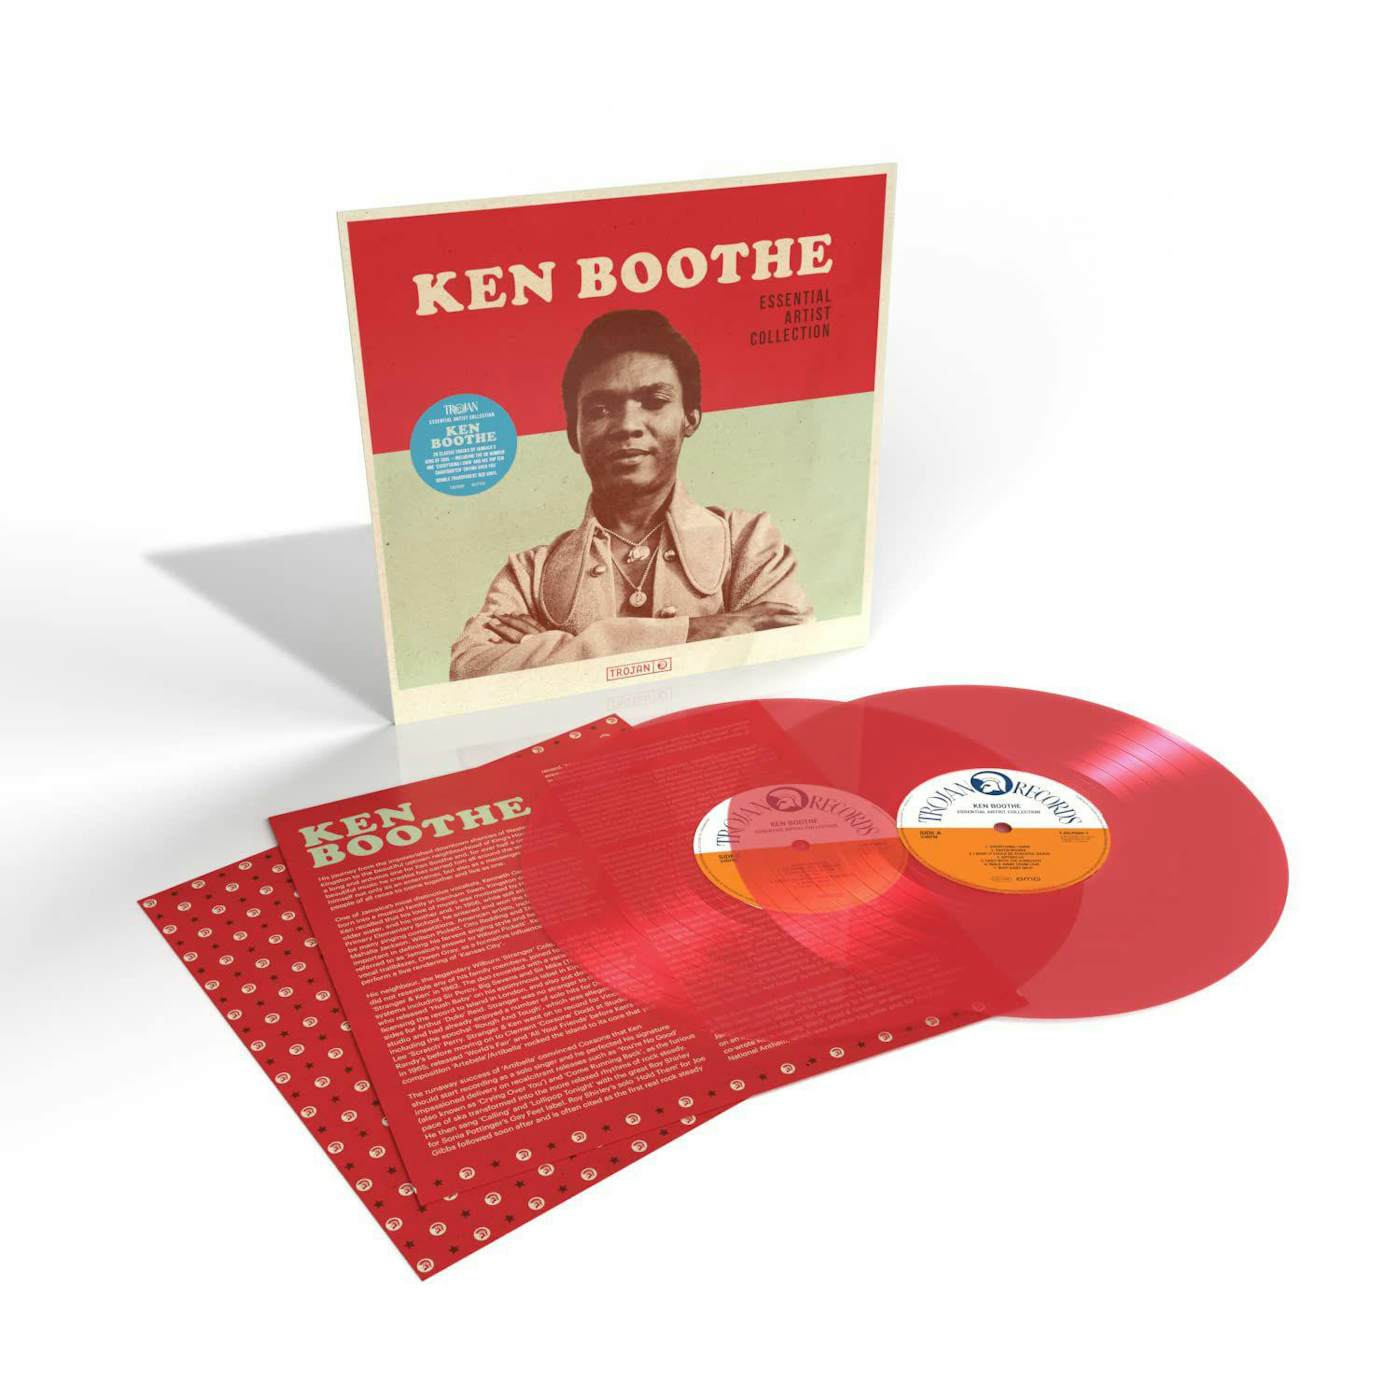 Ken Boothe Essential Artist Collection Vinyl Record